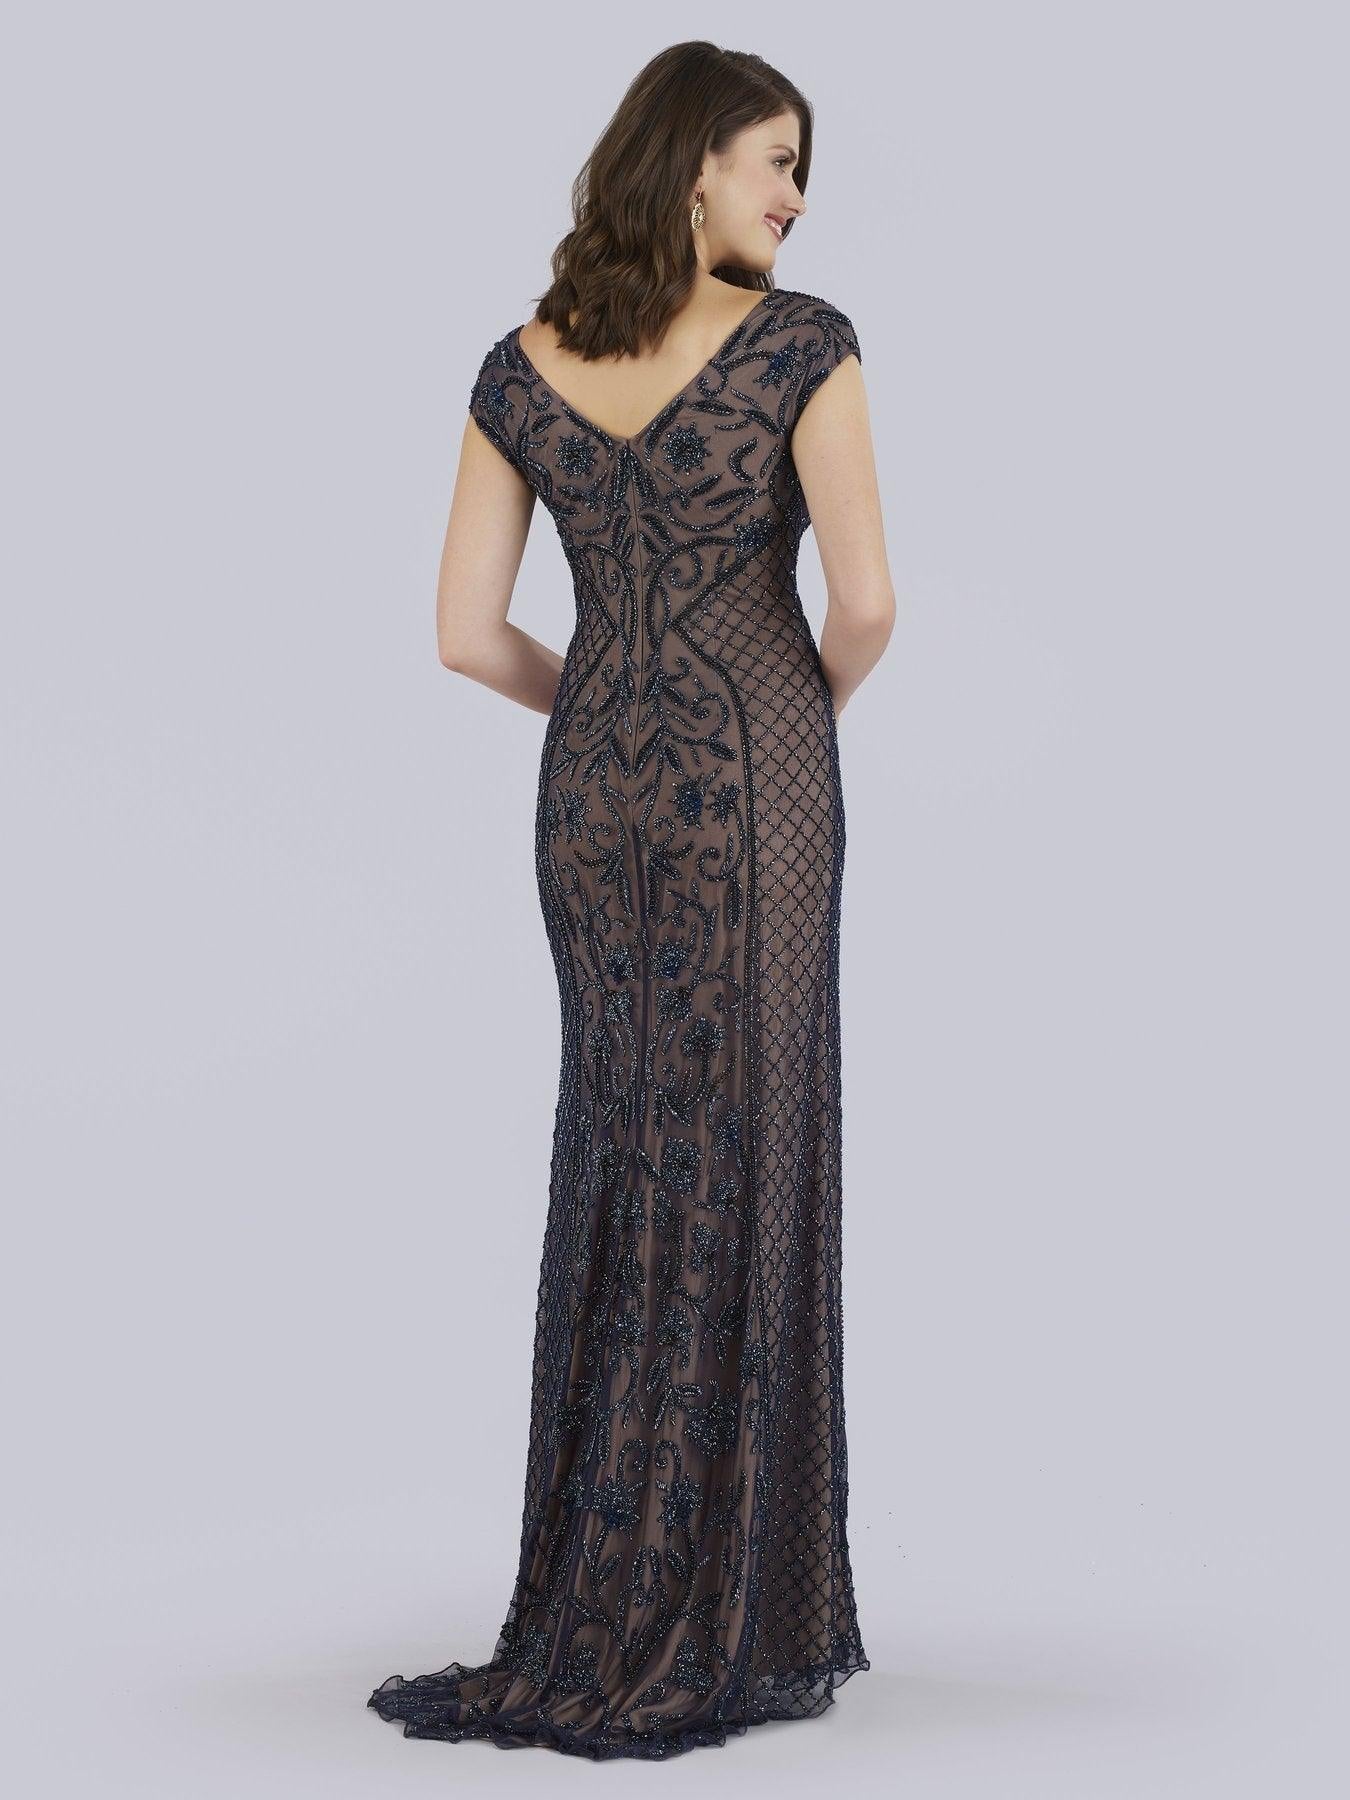 Lara Dresses Cap Sleeve Long Prom Dress 29836 - The Dress Outlet